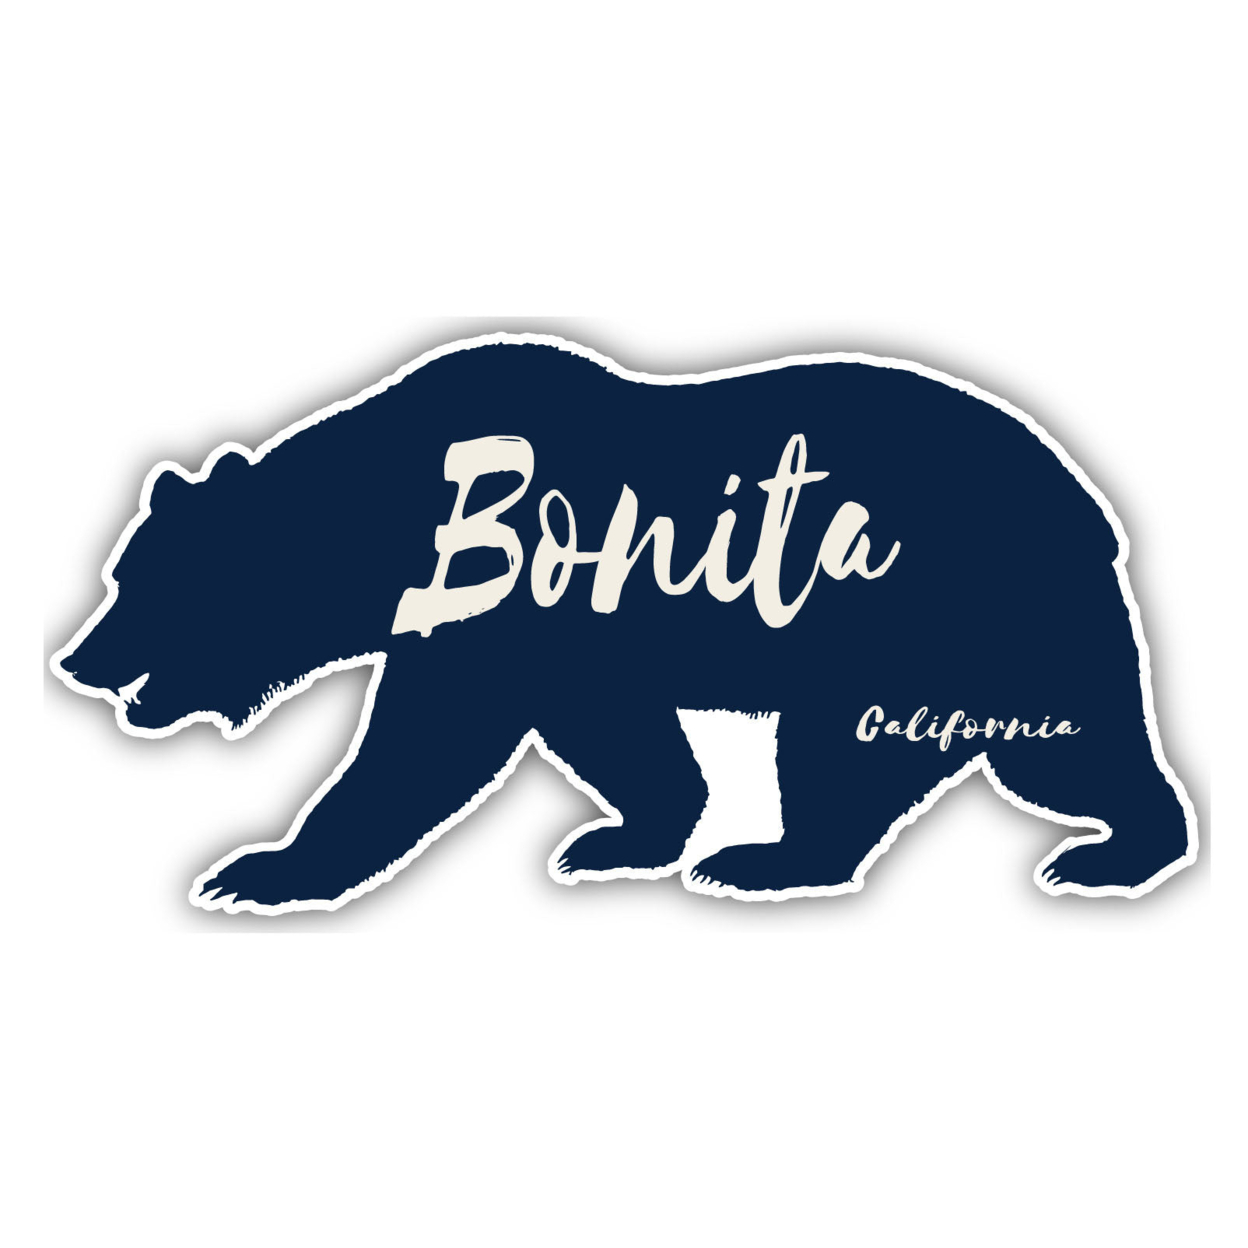 Bonita California Souvenir Decorative Stickers (Choose Theme And Size) - 4-Pack, 4-Inch, Bear